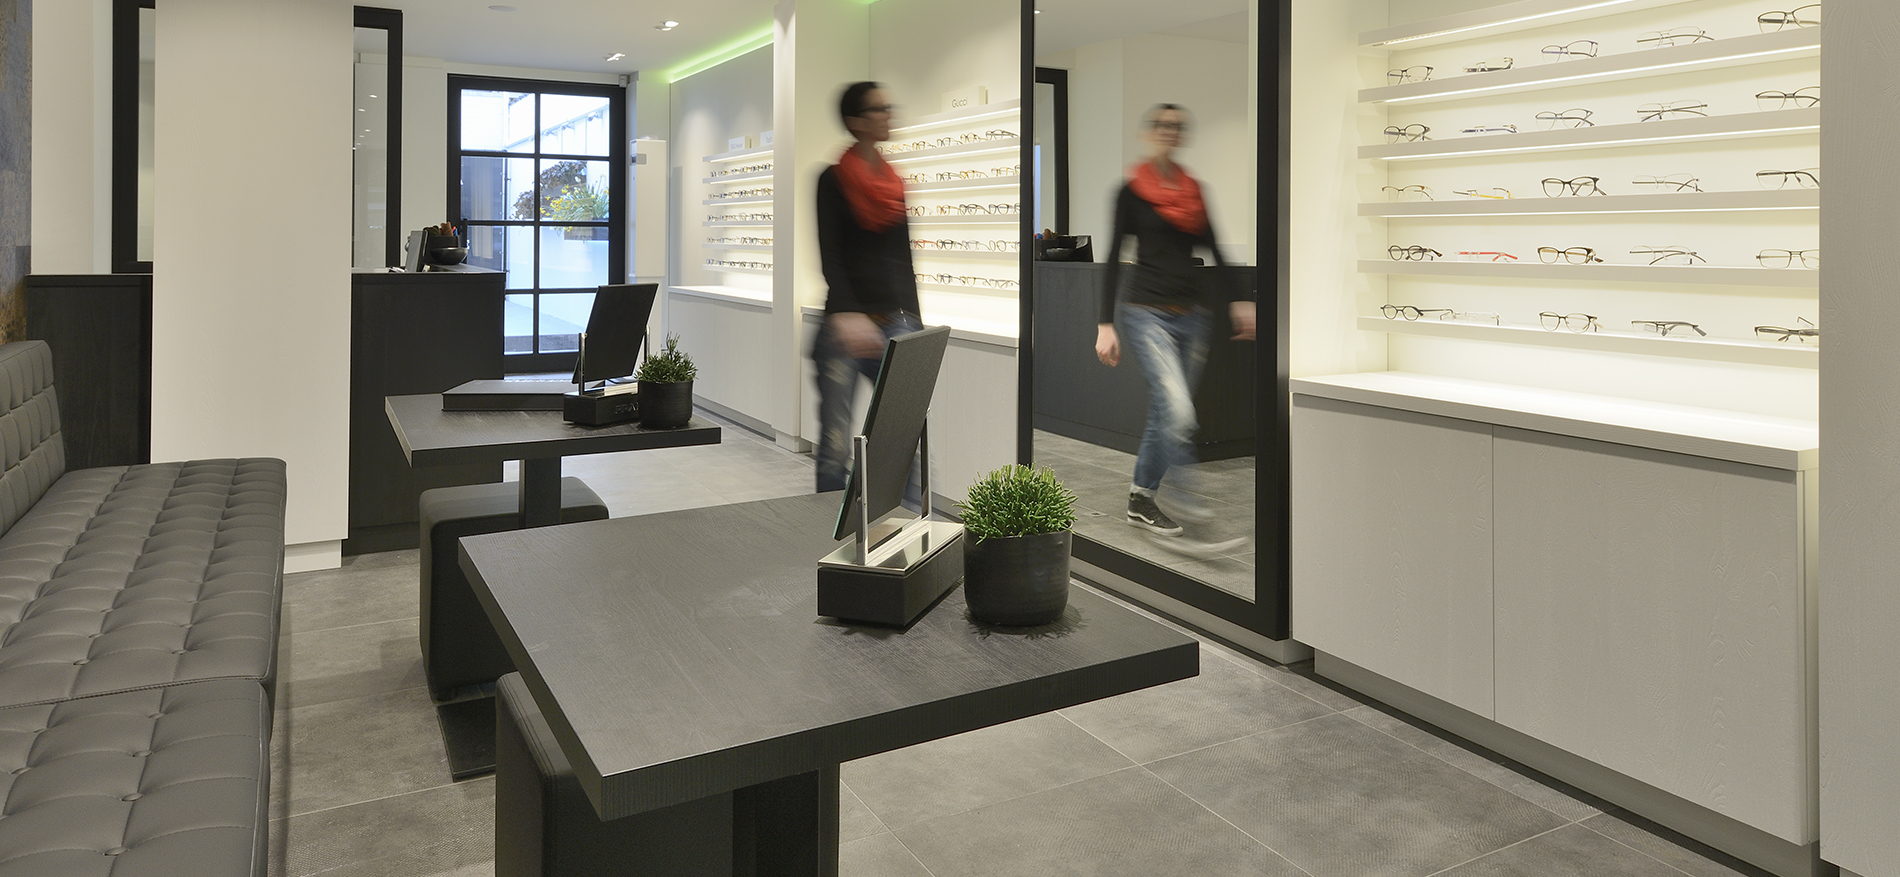 Gobert Opticians – Knokke: New store interior - 